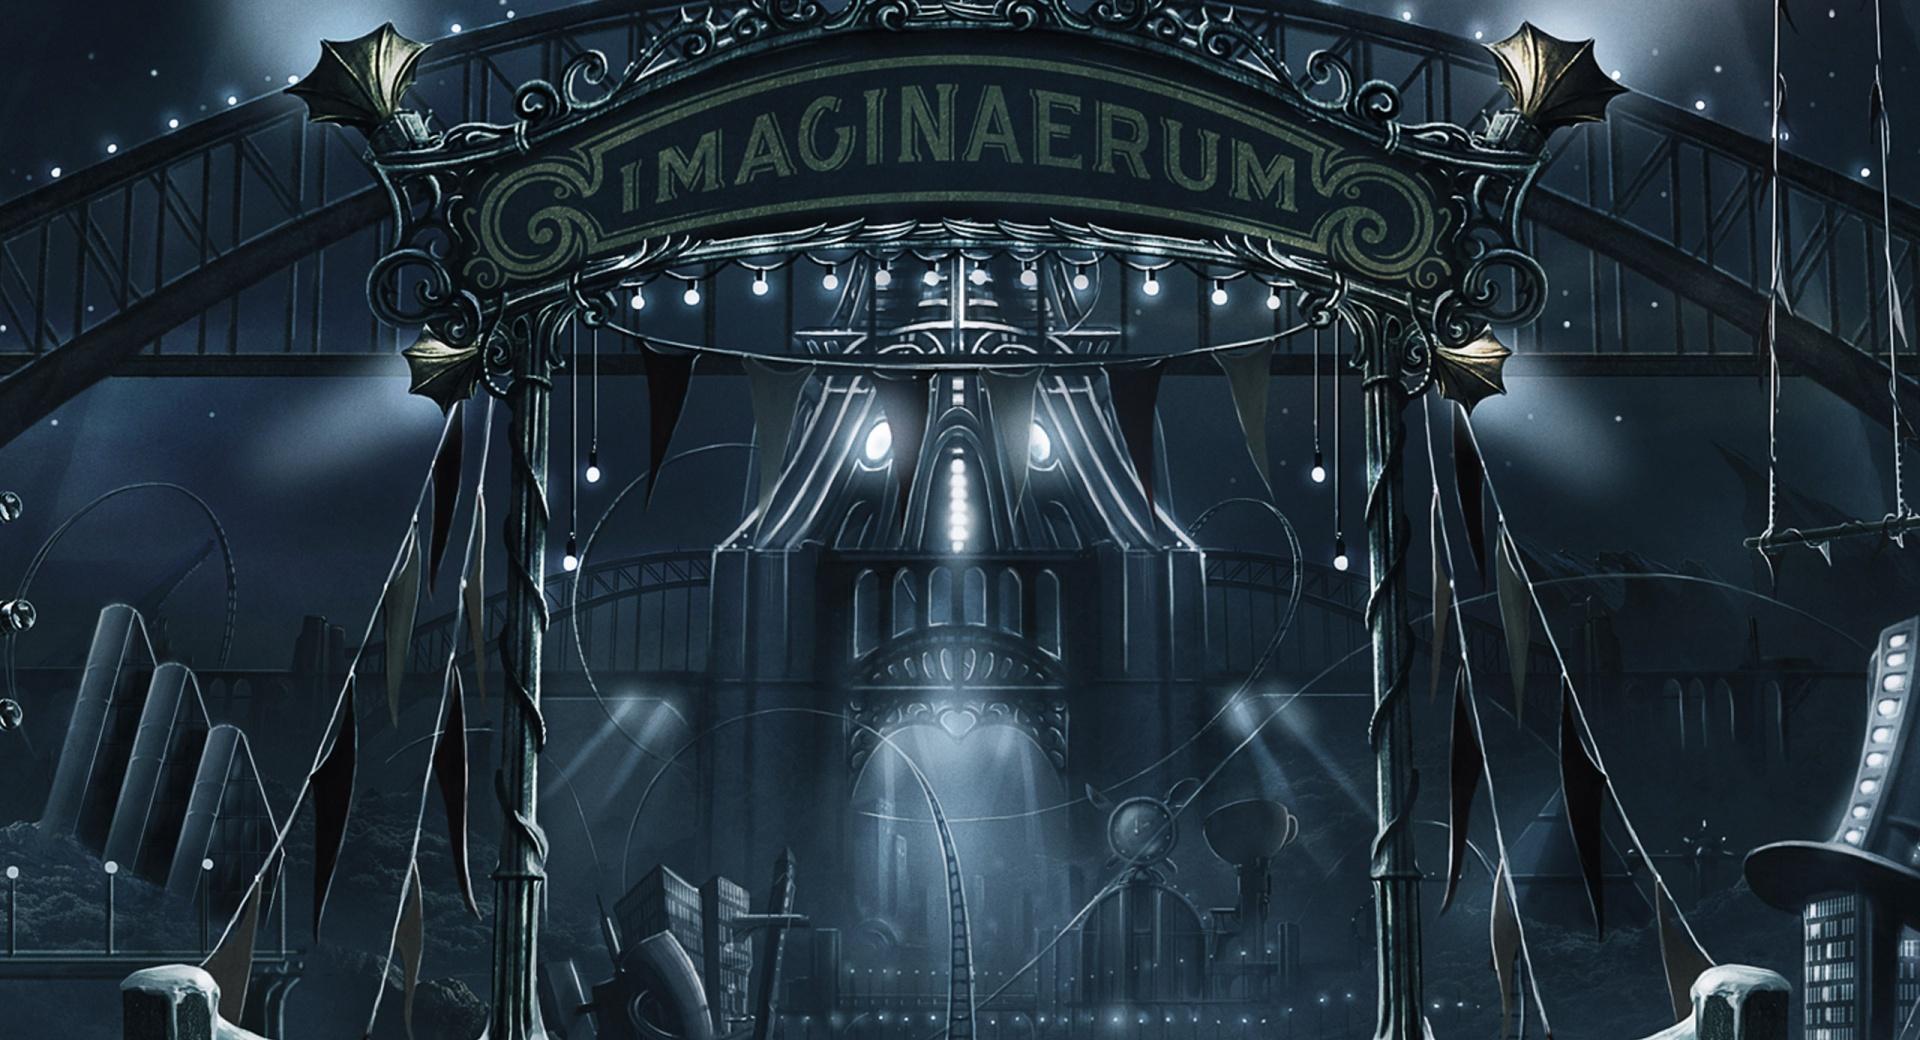 Imaginaerum - Nightwish at 2048 x 2048 iPad size wallpapers HD quality